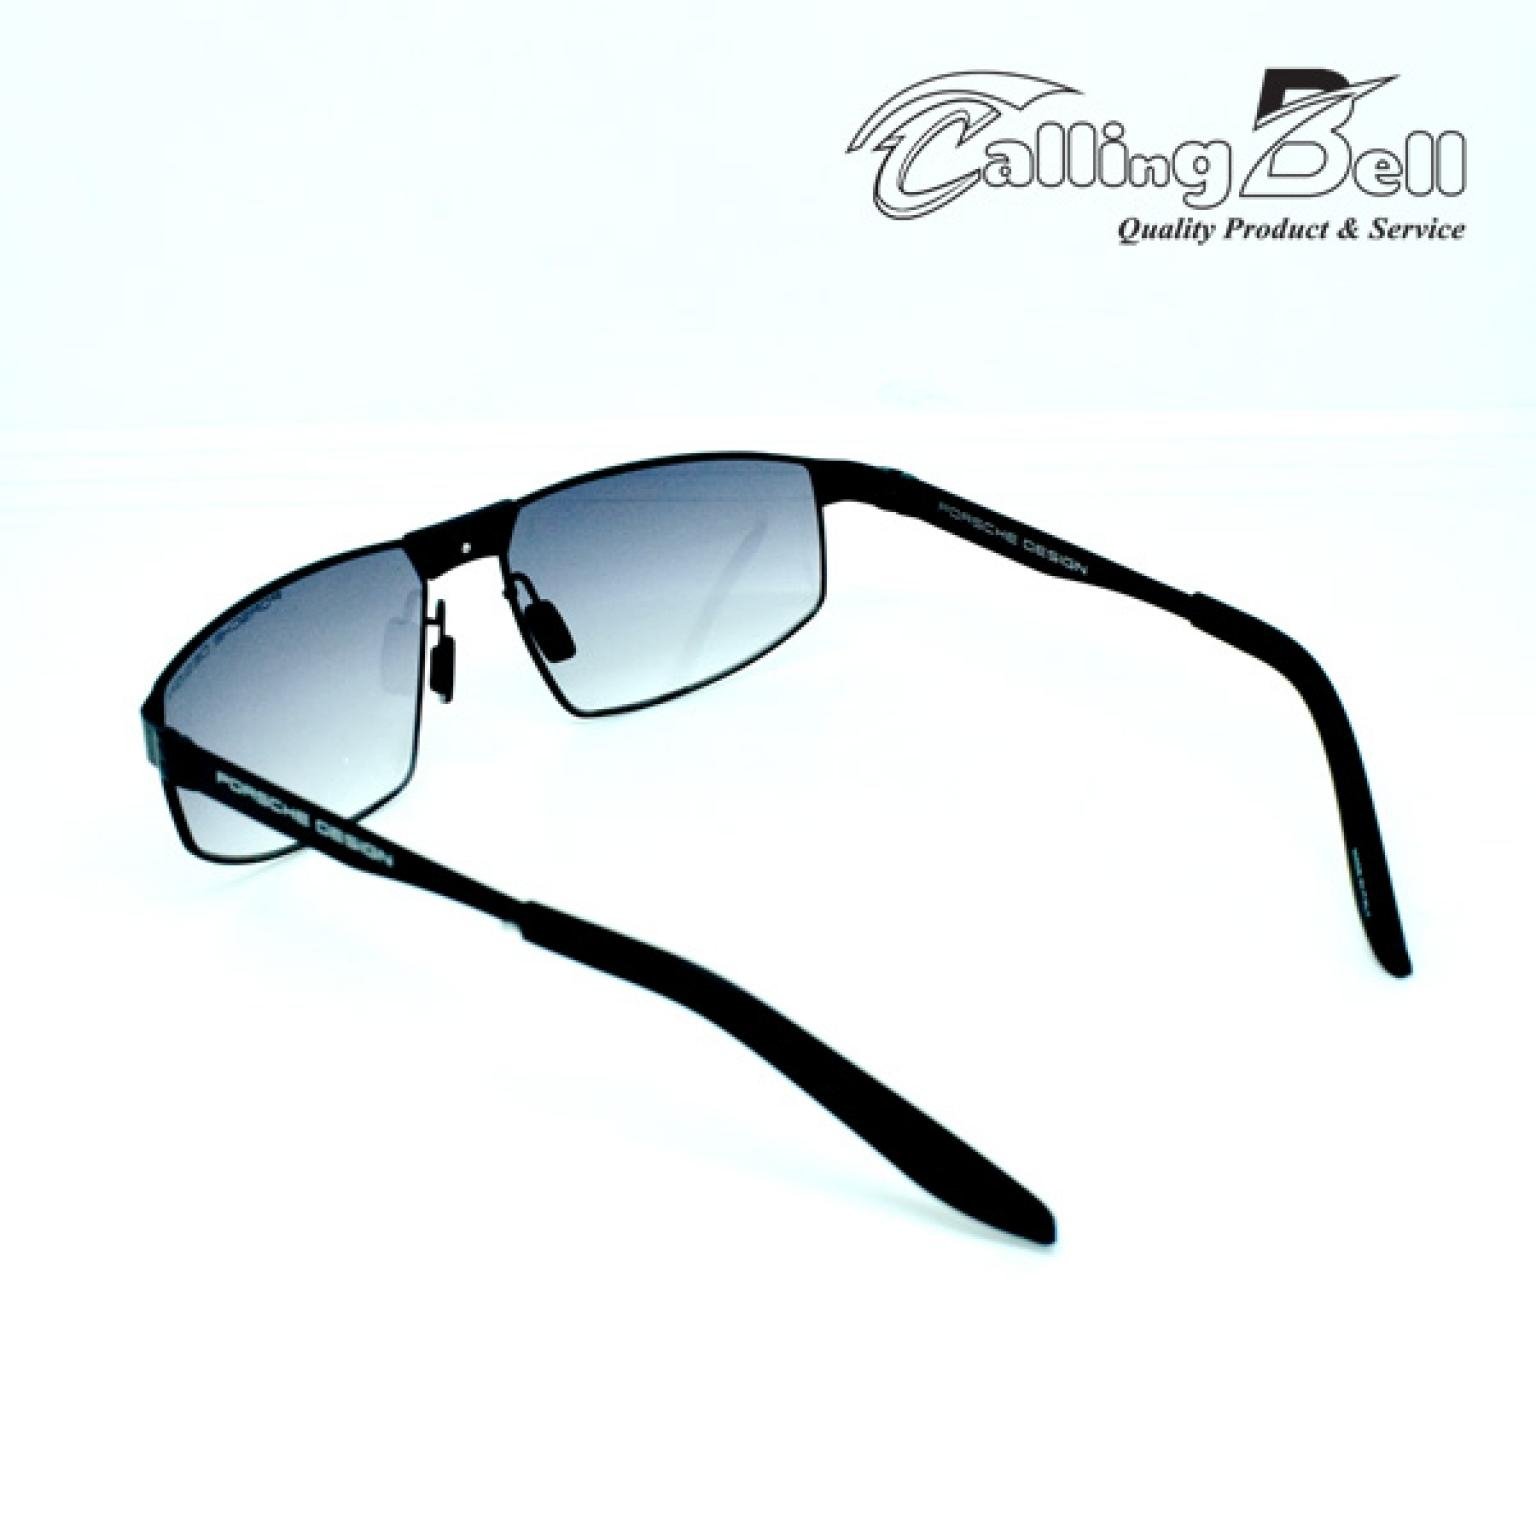 Light Weight Premium Quality Polycarbonate Lens Sunglasses For Driving Men Women Latest Design Shade 